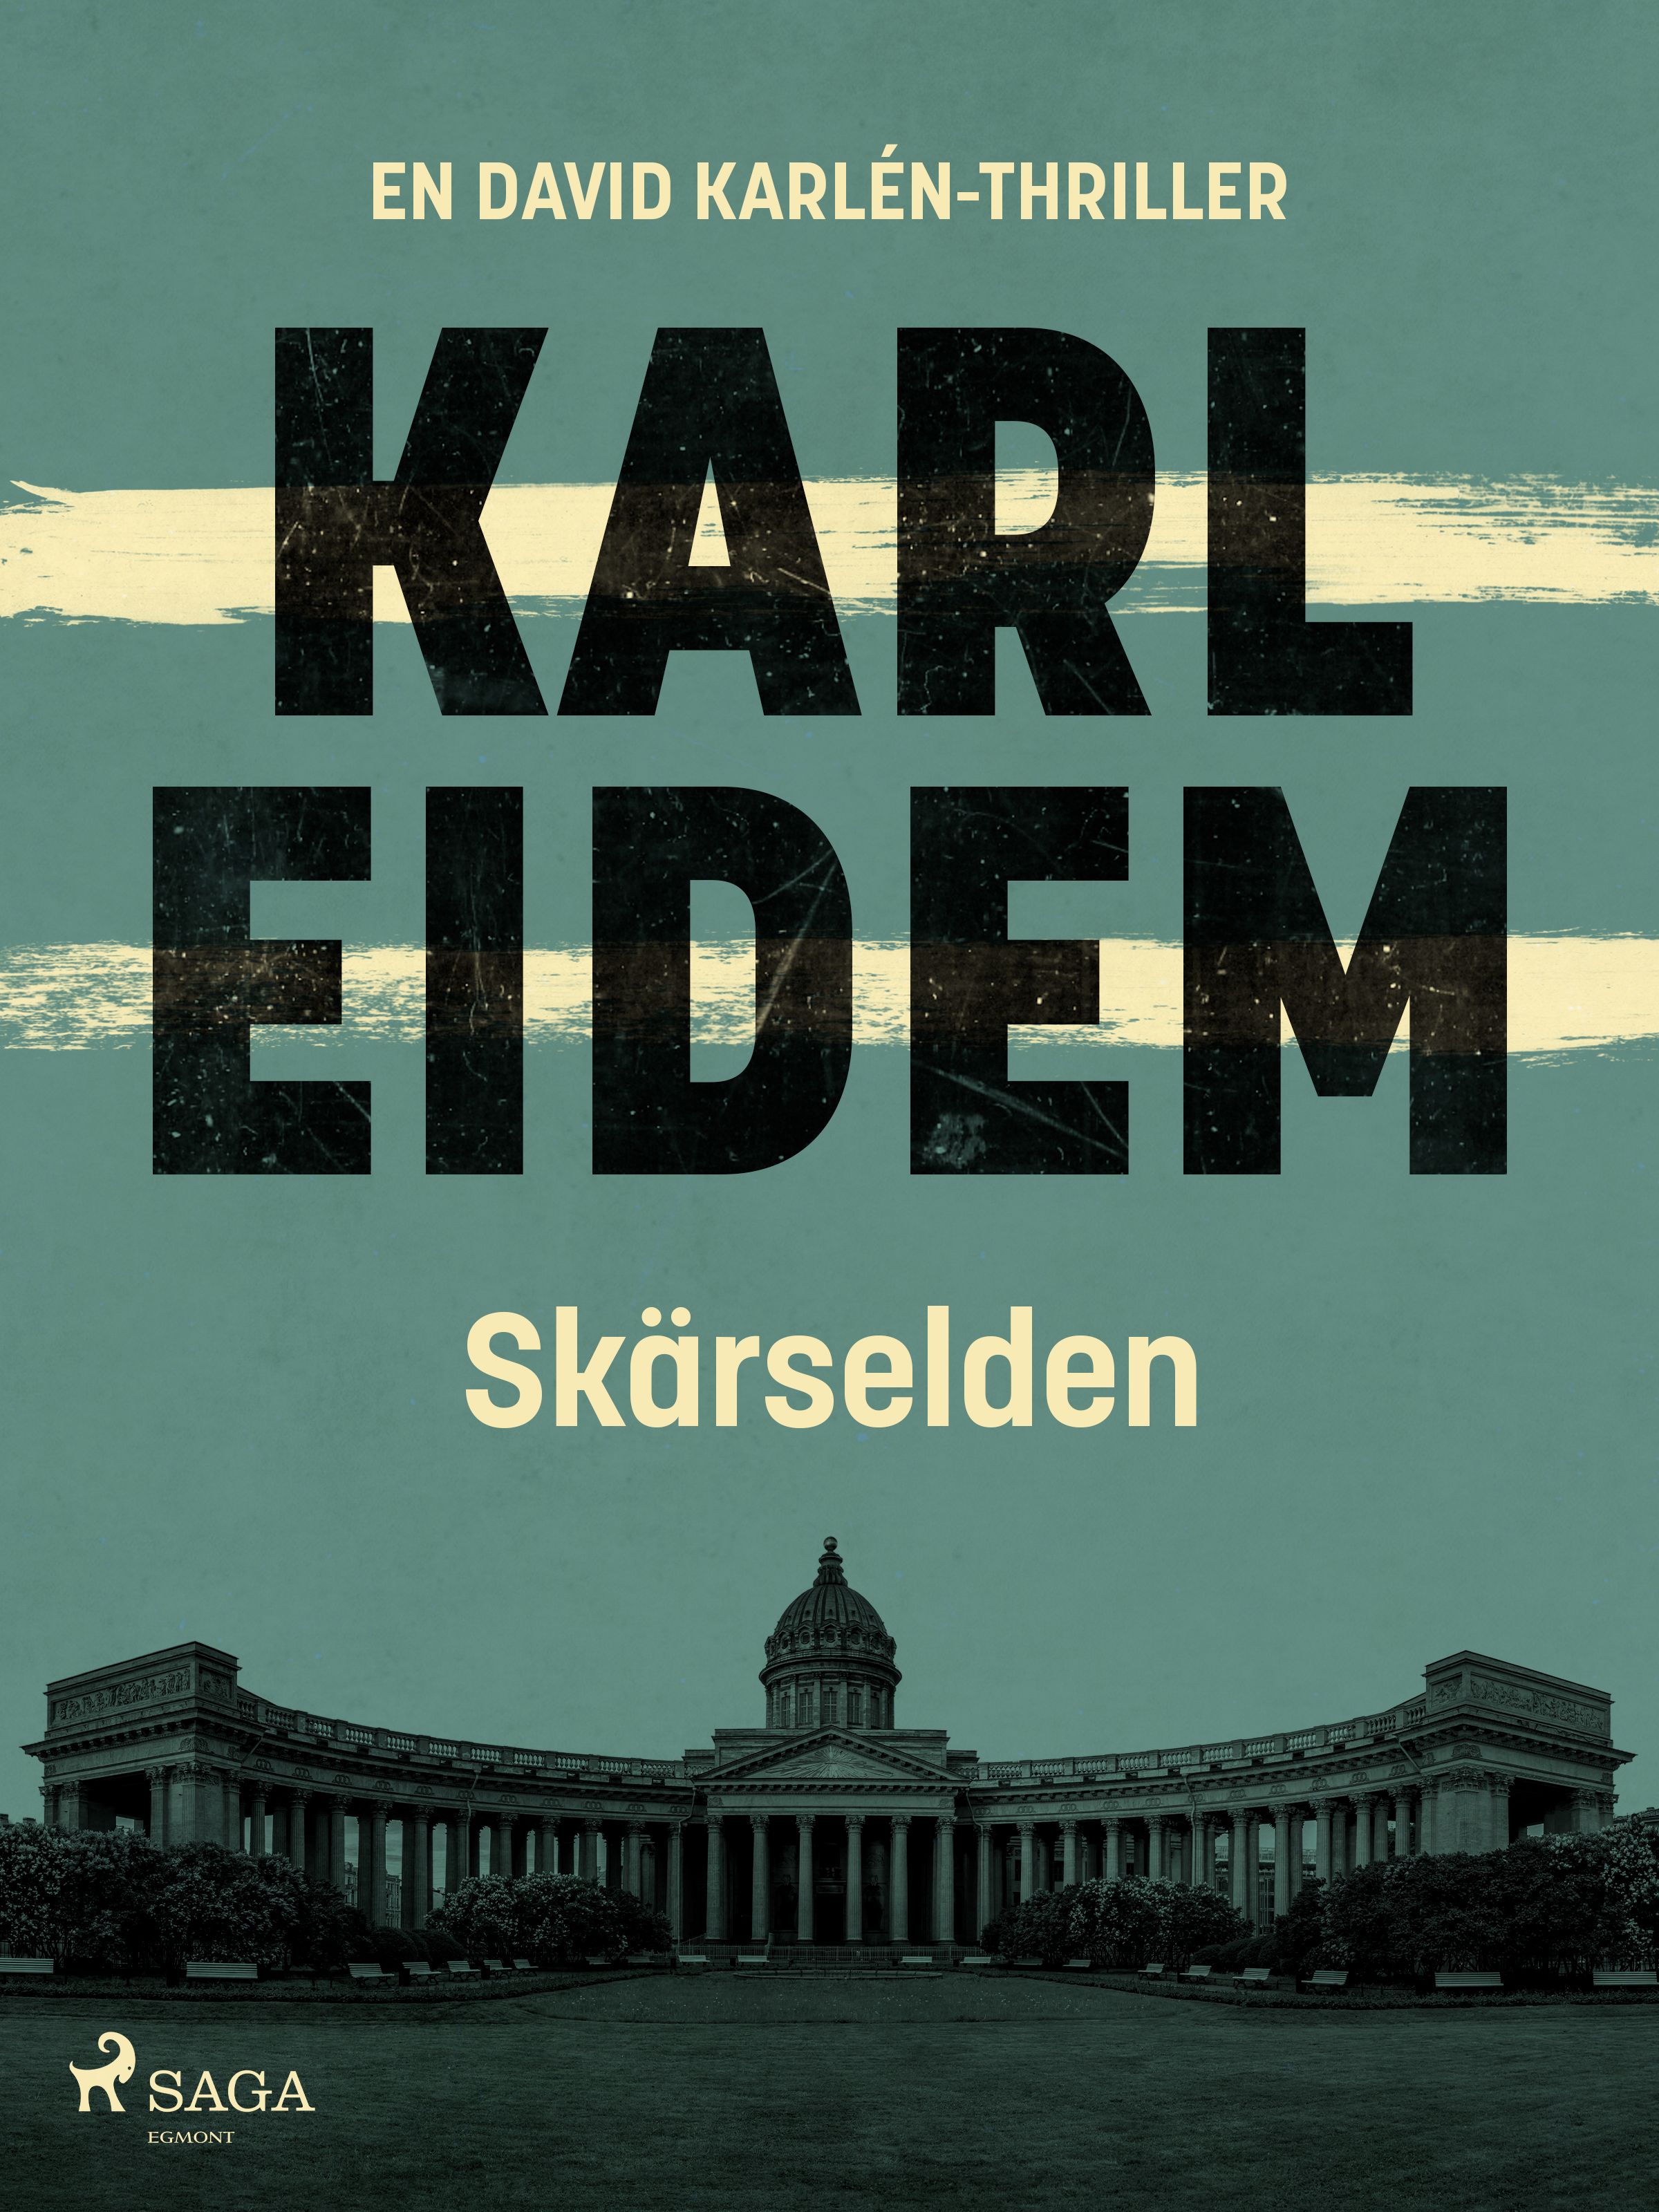 Skärselden, eBook by Karl Eidem